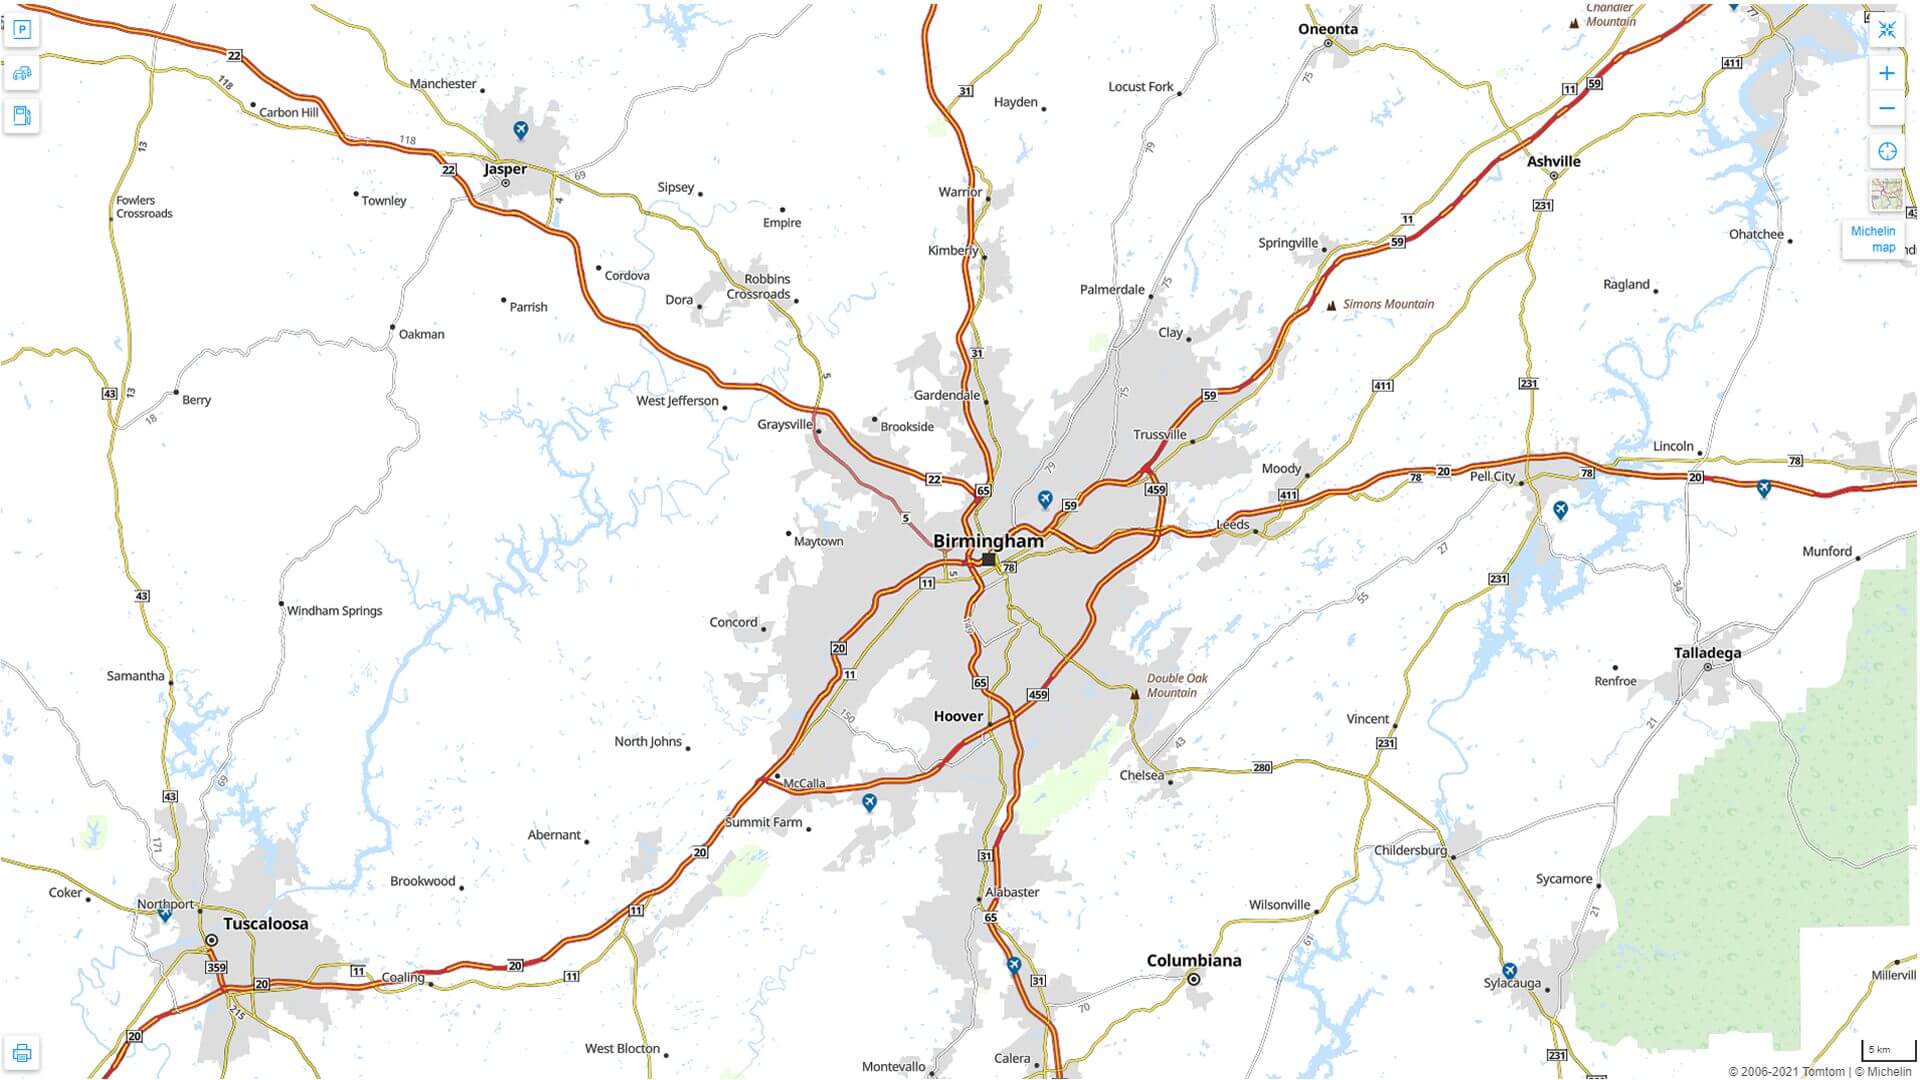 Birmingham Alabama Highway and Road Map